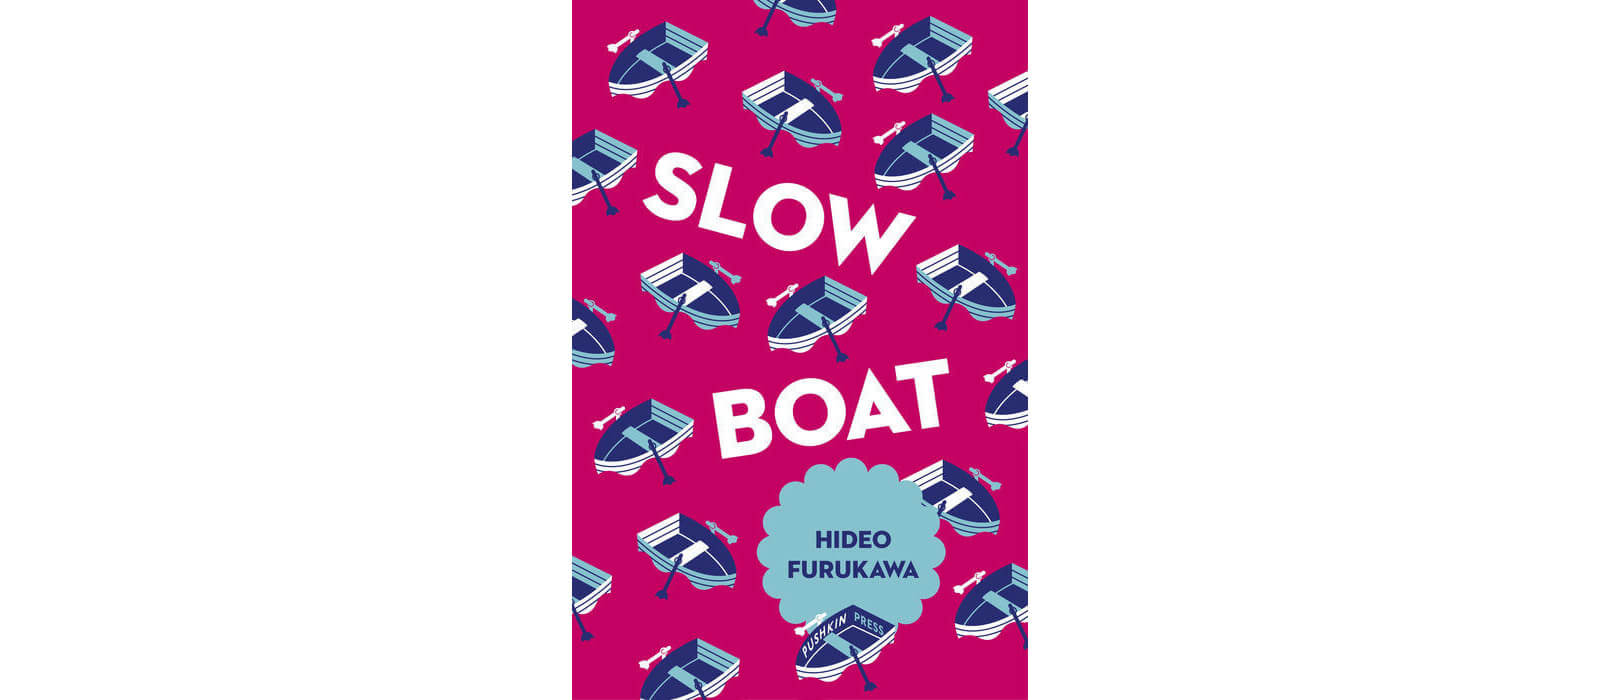 June 2017 Manga Releases - Slow Boat